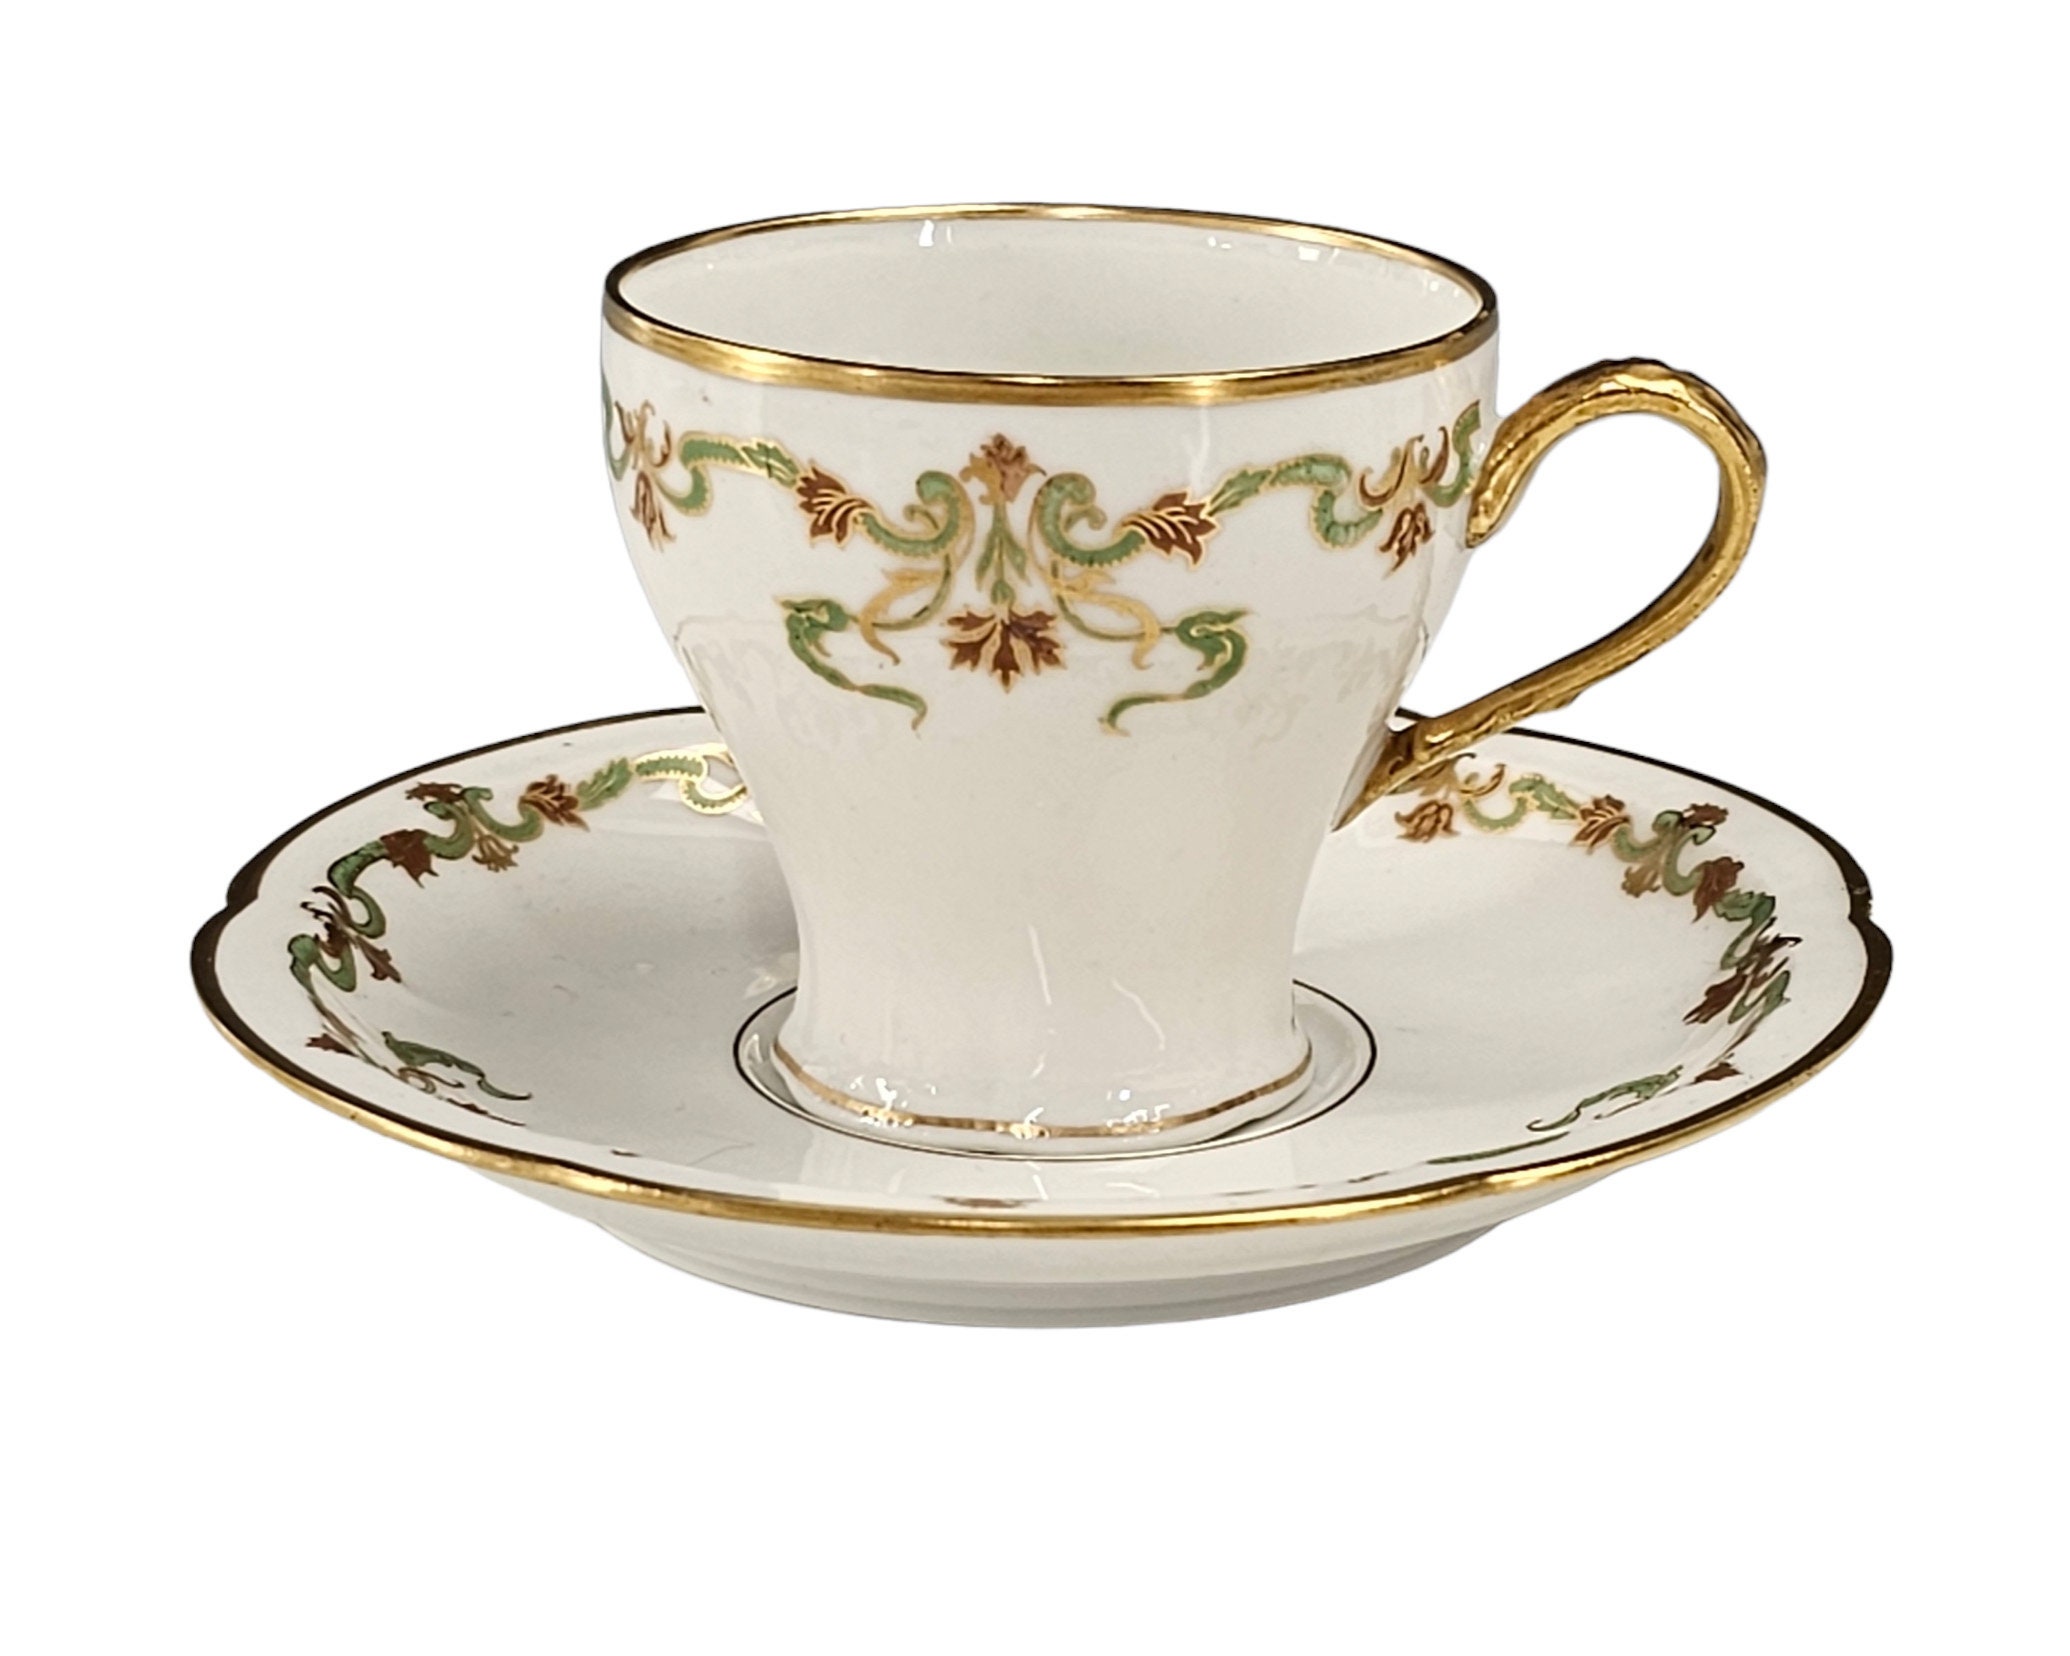 Set of 6 Colorful Porcelain Espresso Cups and Saucer Set - 2 oz, Gold Floral, Size: 2.25 x 3 x 2.25